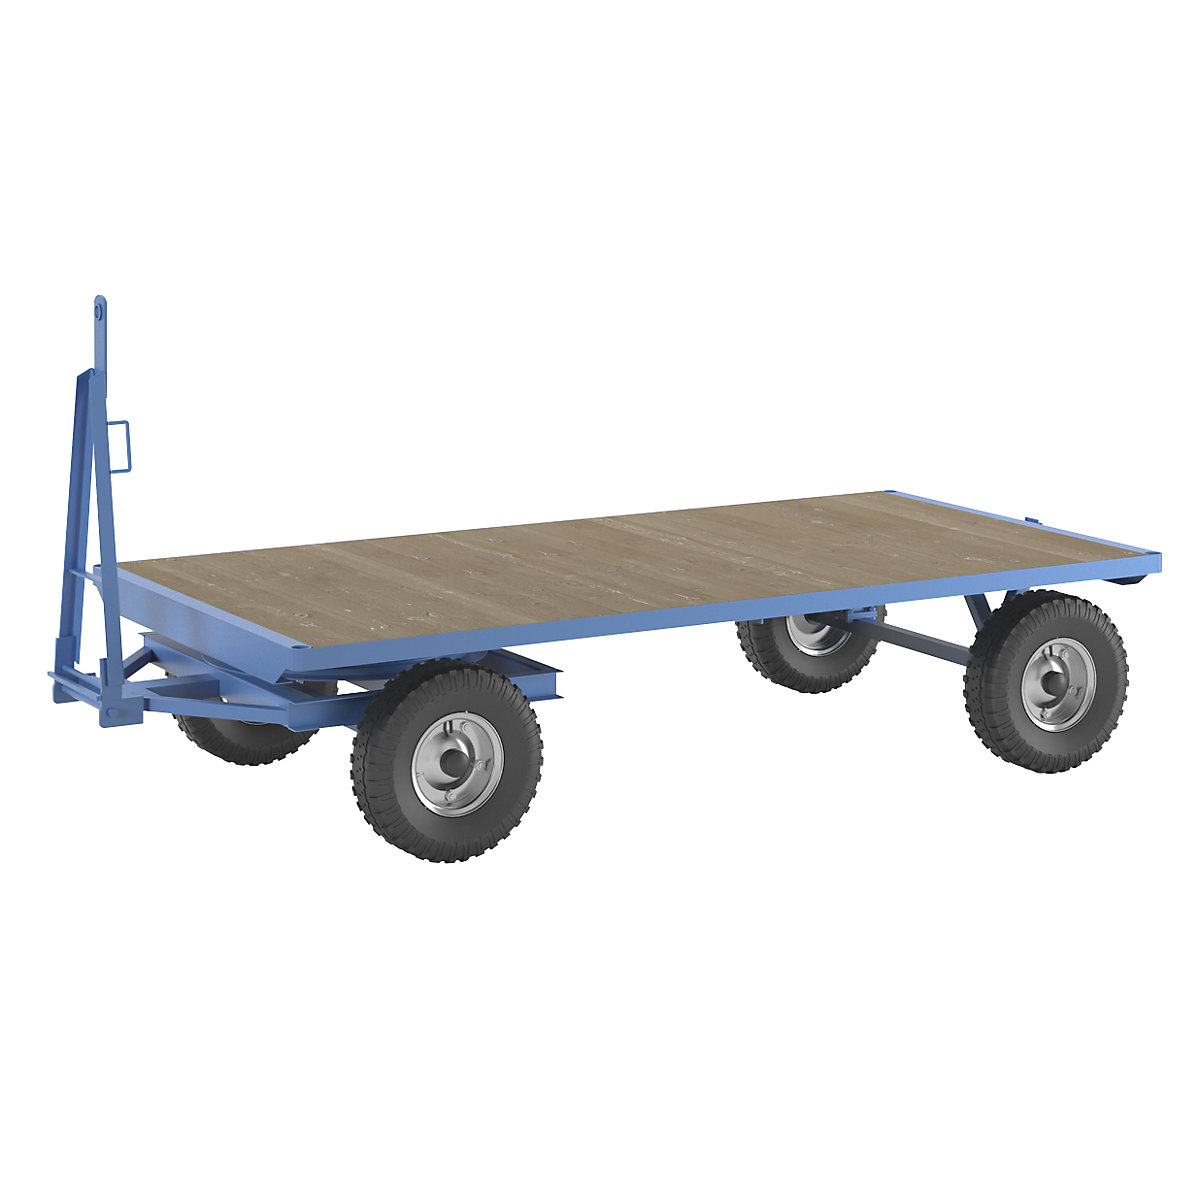 Trailer – eurokraft pro, turntable steering, max. load 5 t, platform 3 x 1.5 m, light blue-1